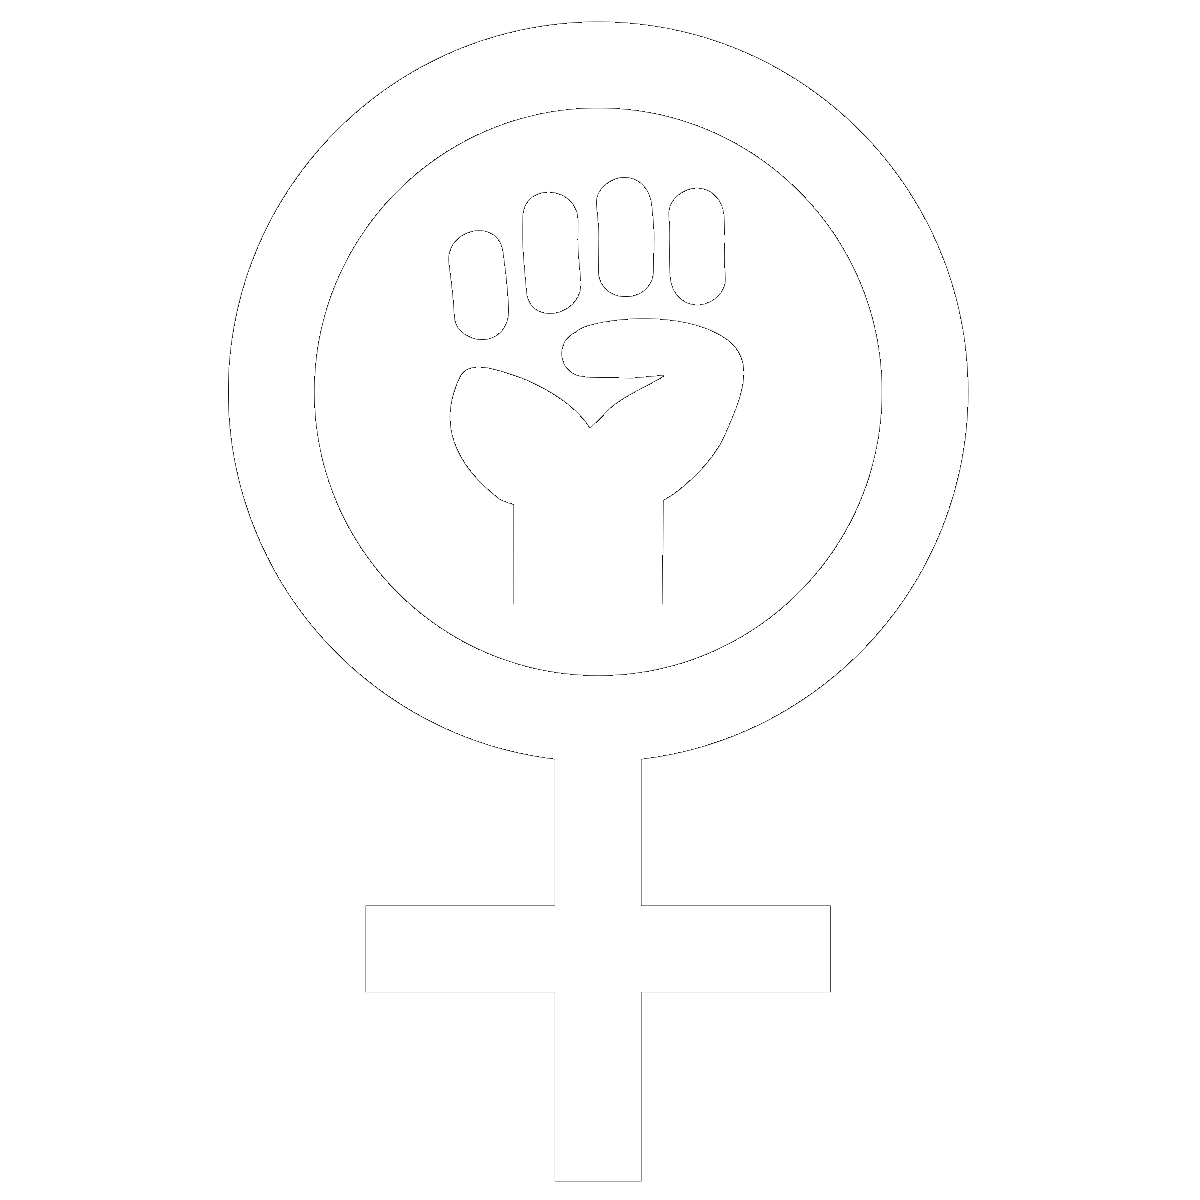 Theme Female Power, Subjugation, and Revolt